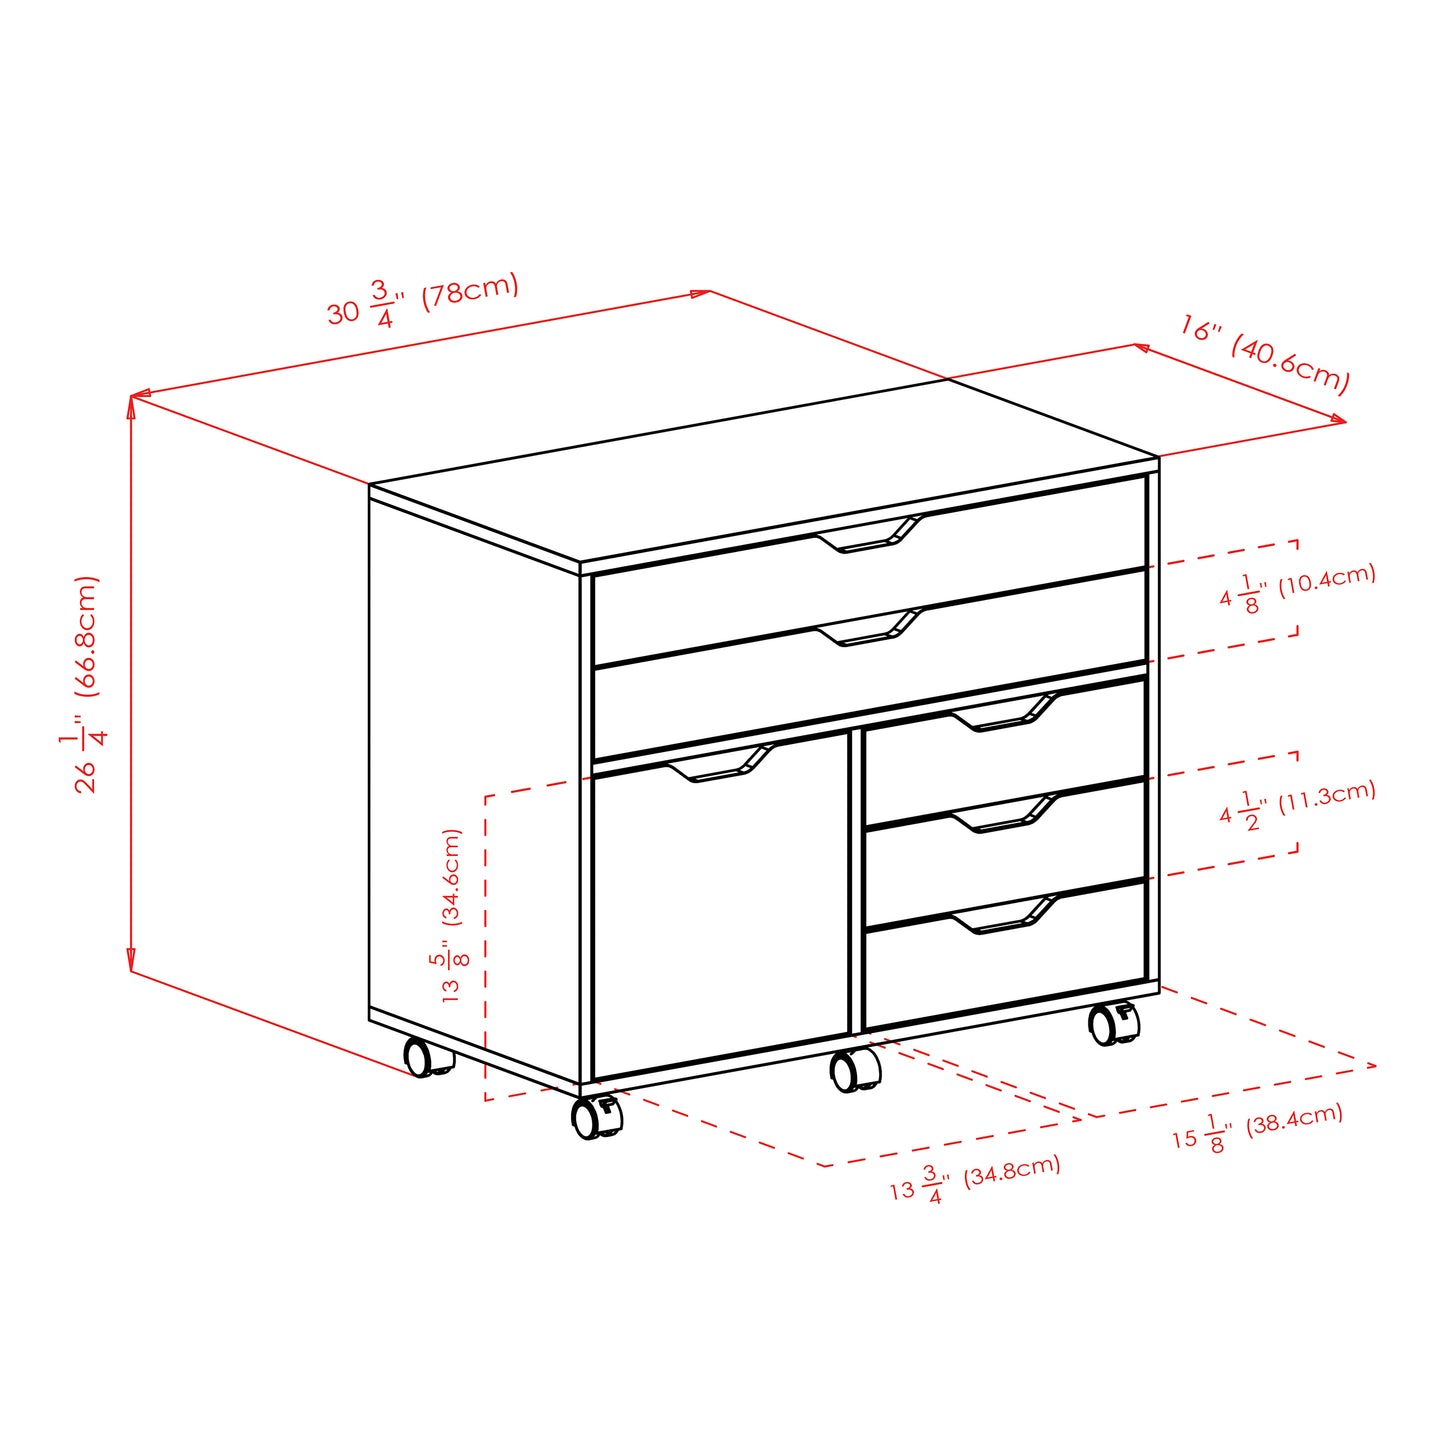 Halifax Wide Storage Cabinet, 3-Small & 2-Wide Drawers, Black